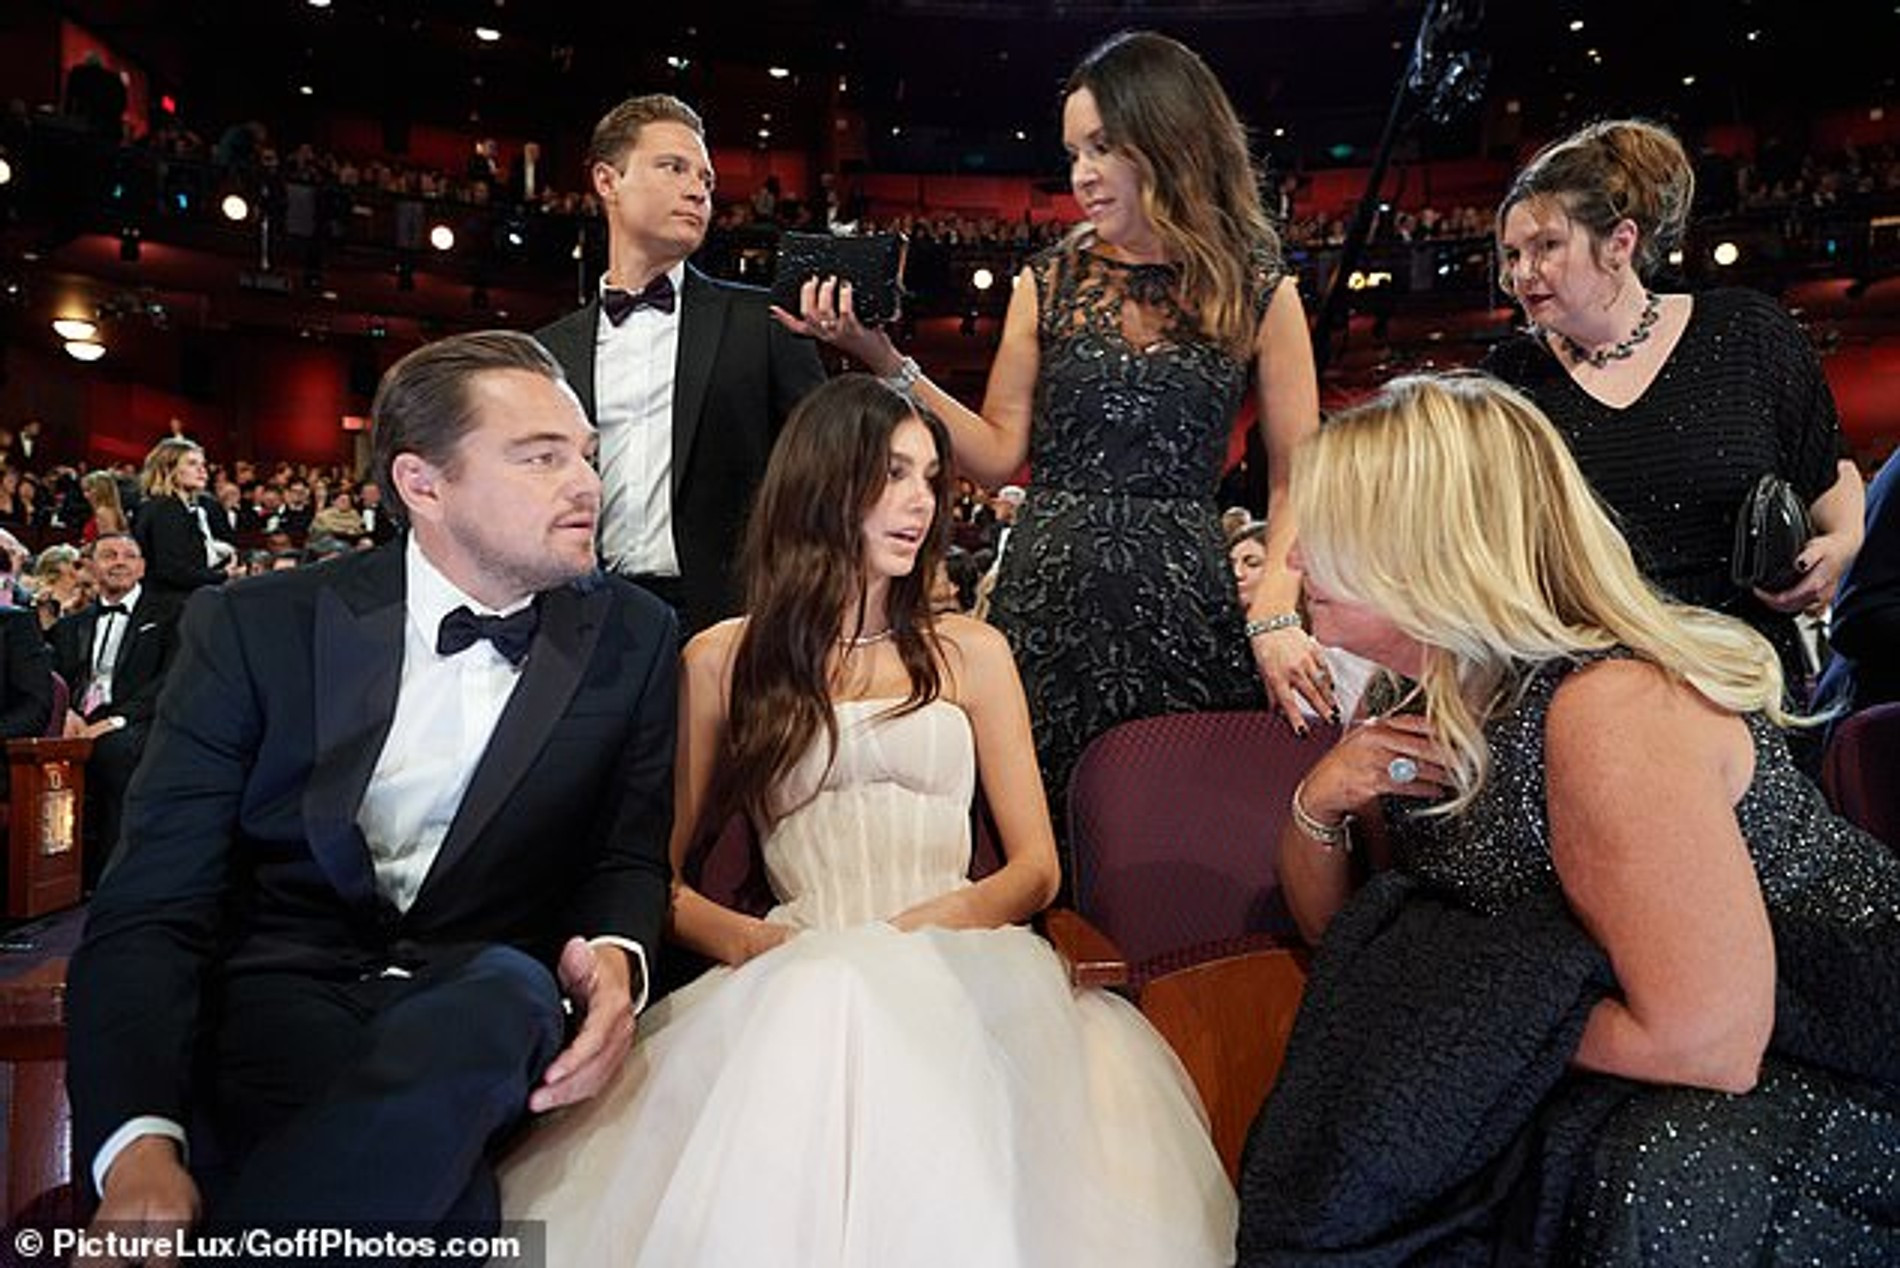 Фото: Daily Mail
Лео и Камилла на церемонии «Оскар»